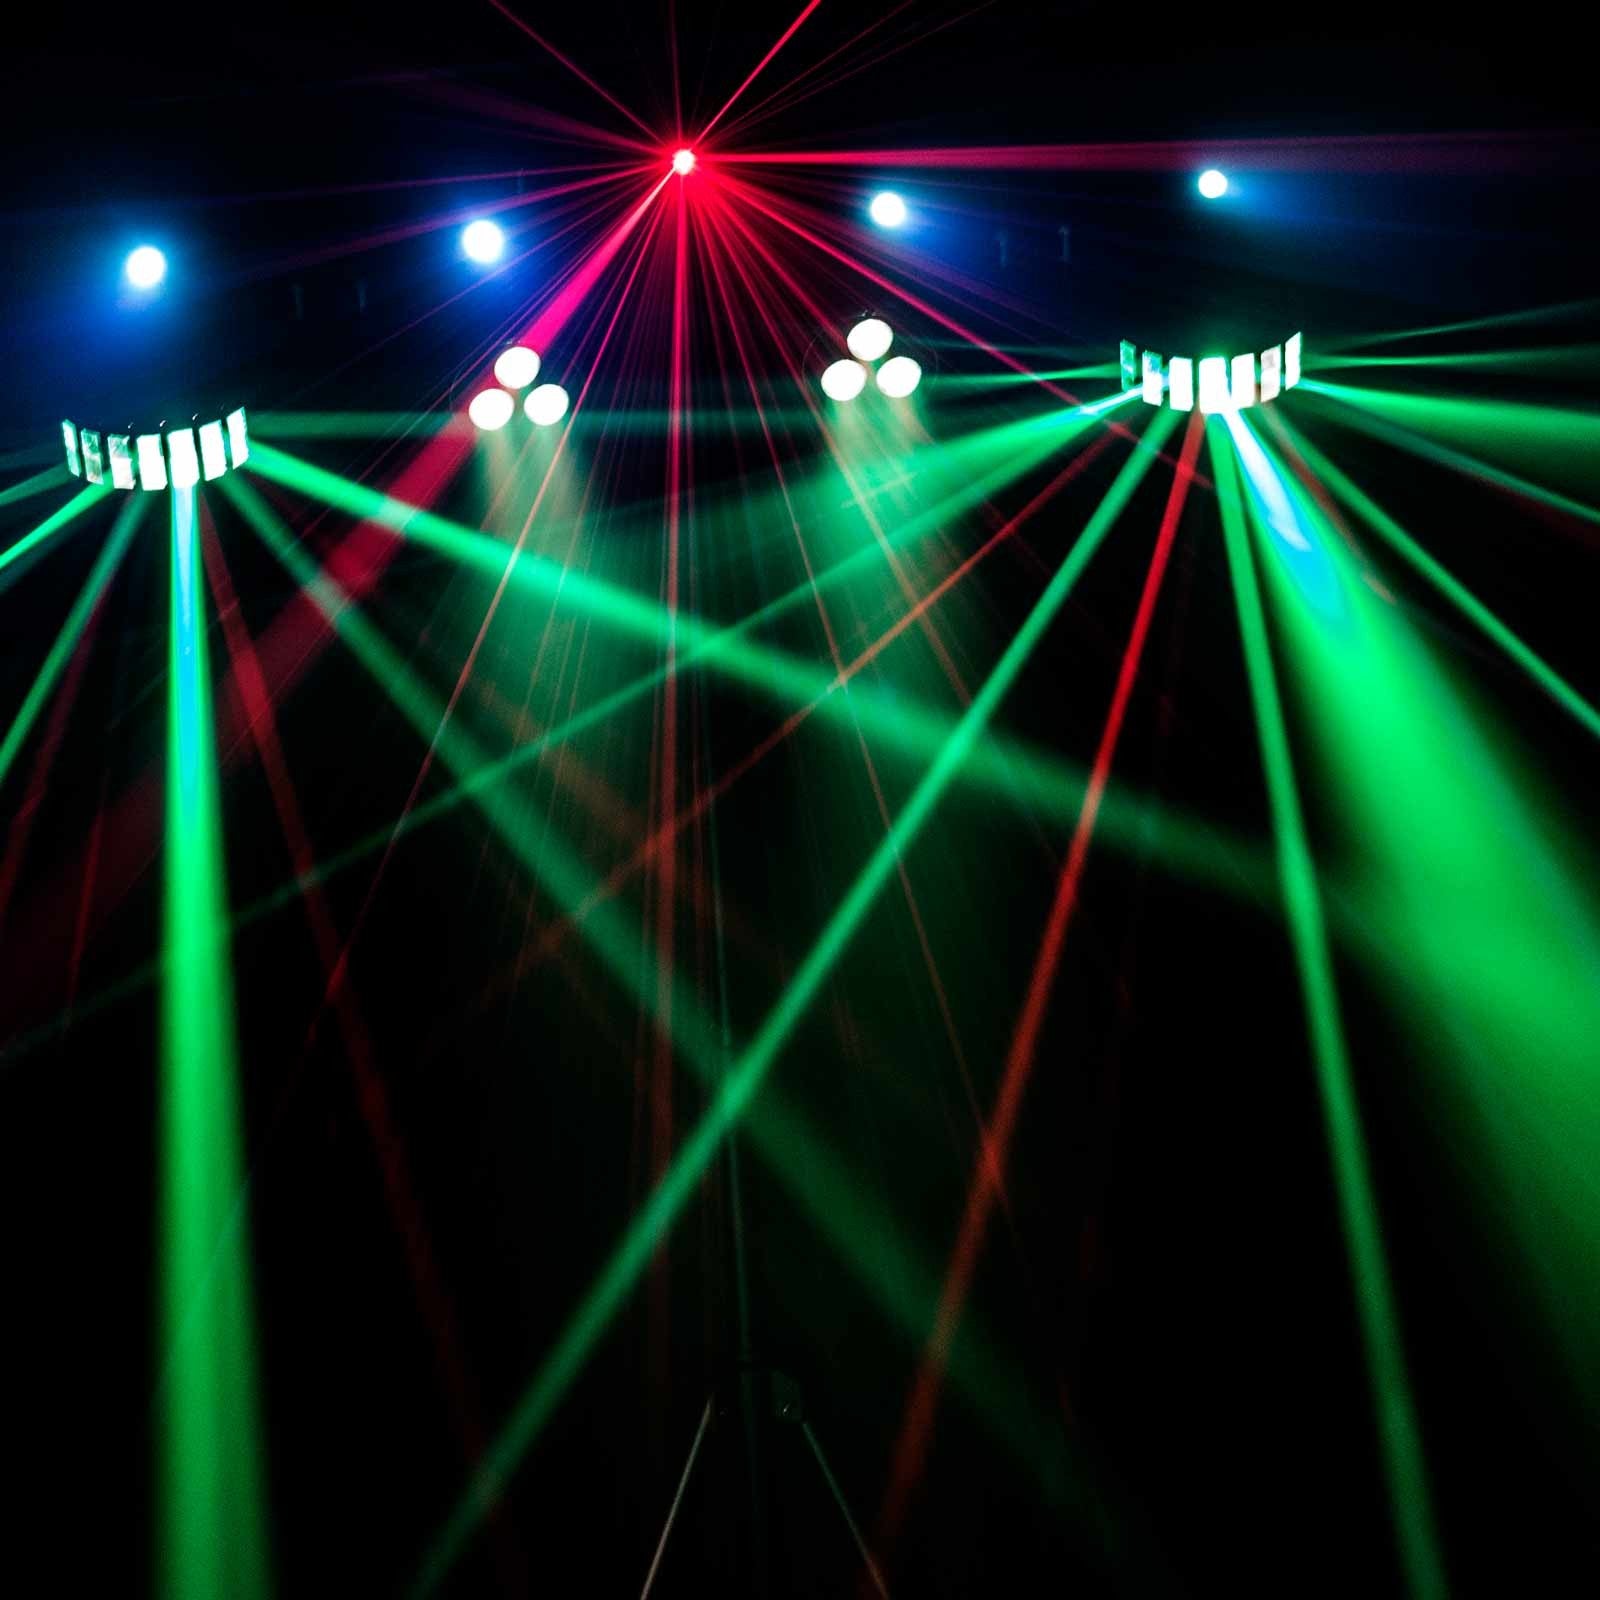 CHAUVET DJ GIGBAR 2 4-IN-1 LIGHTING SYSTEM Model: GIGBAR-2